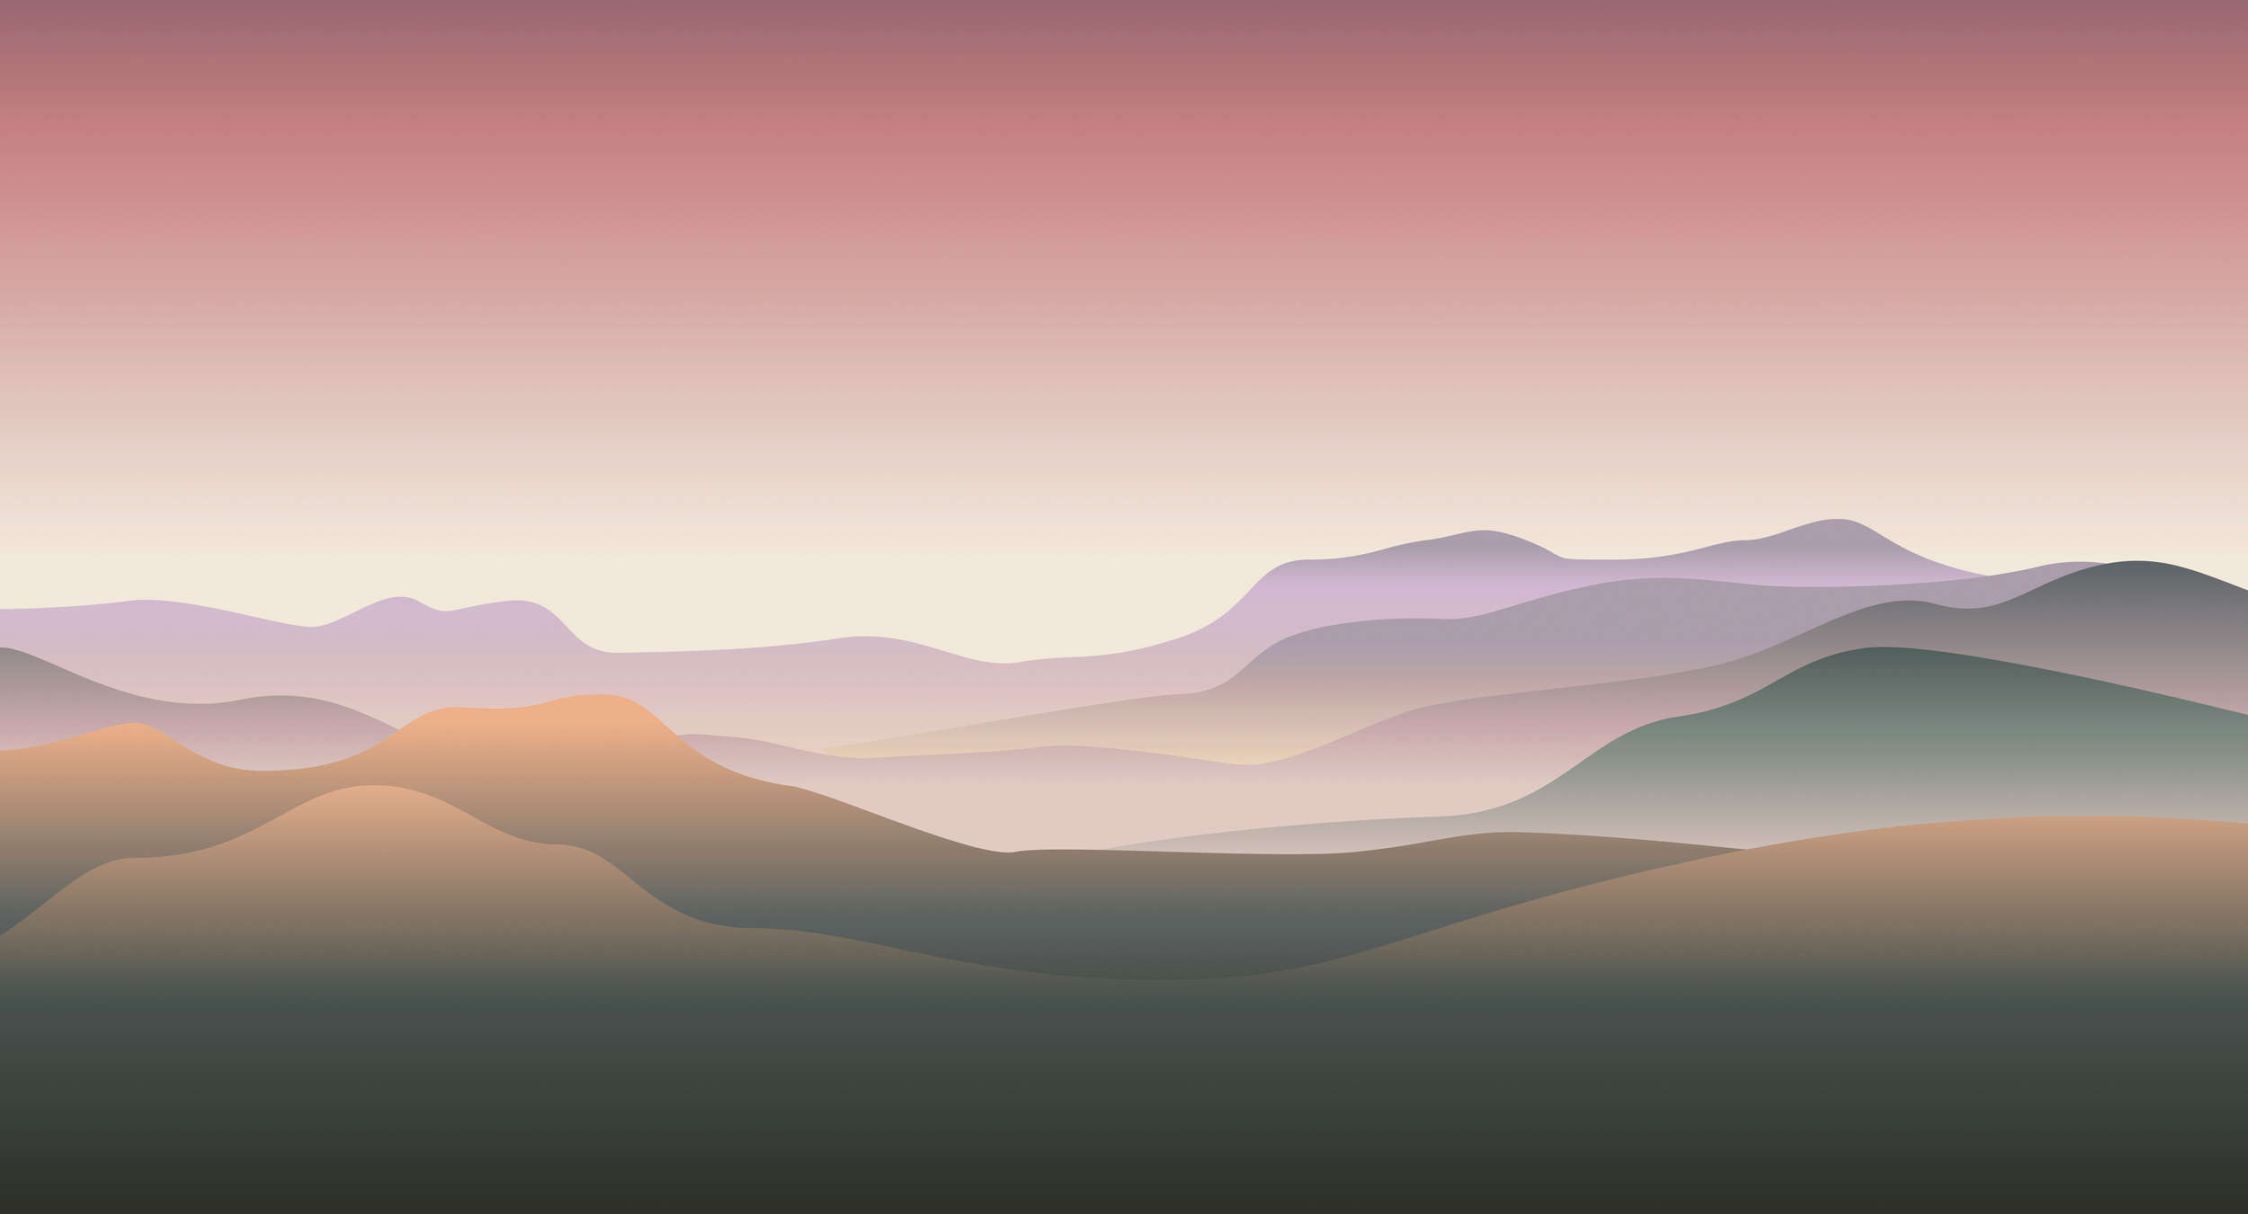             Fotomural »terra« - Paisaje montañoso colorido - Tela no tejida mate, Liso
        